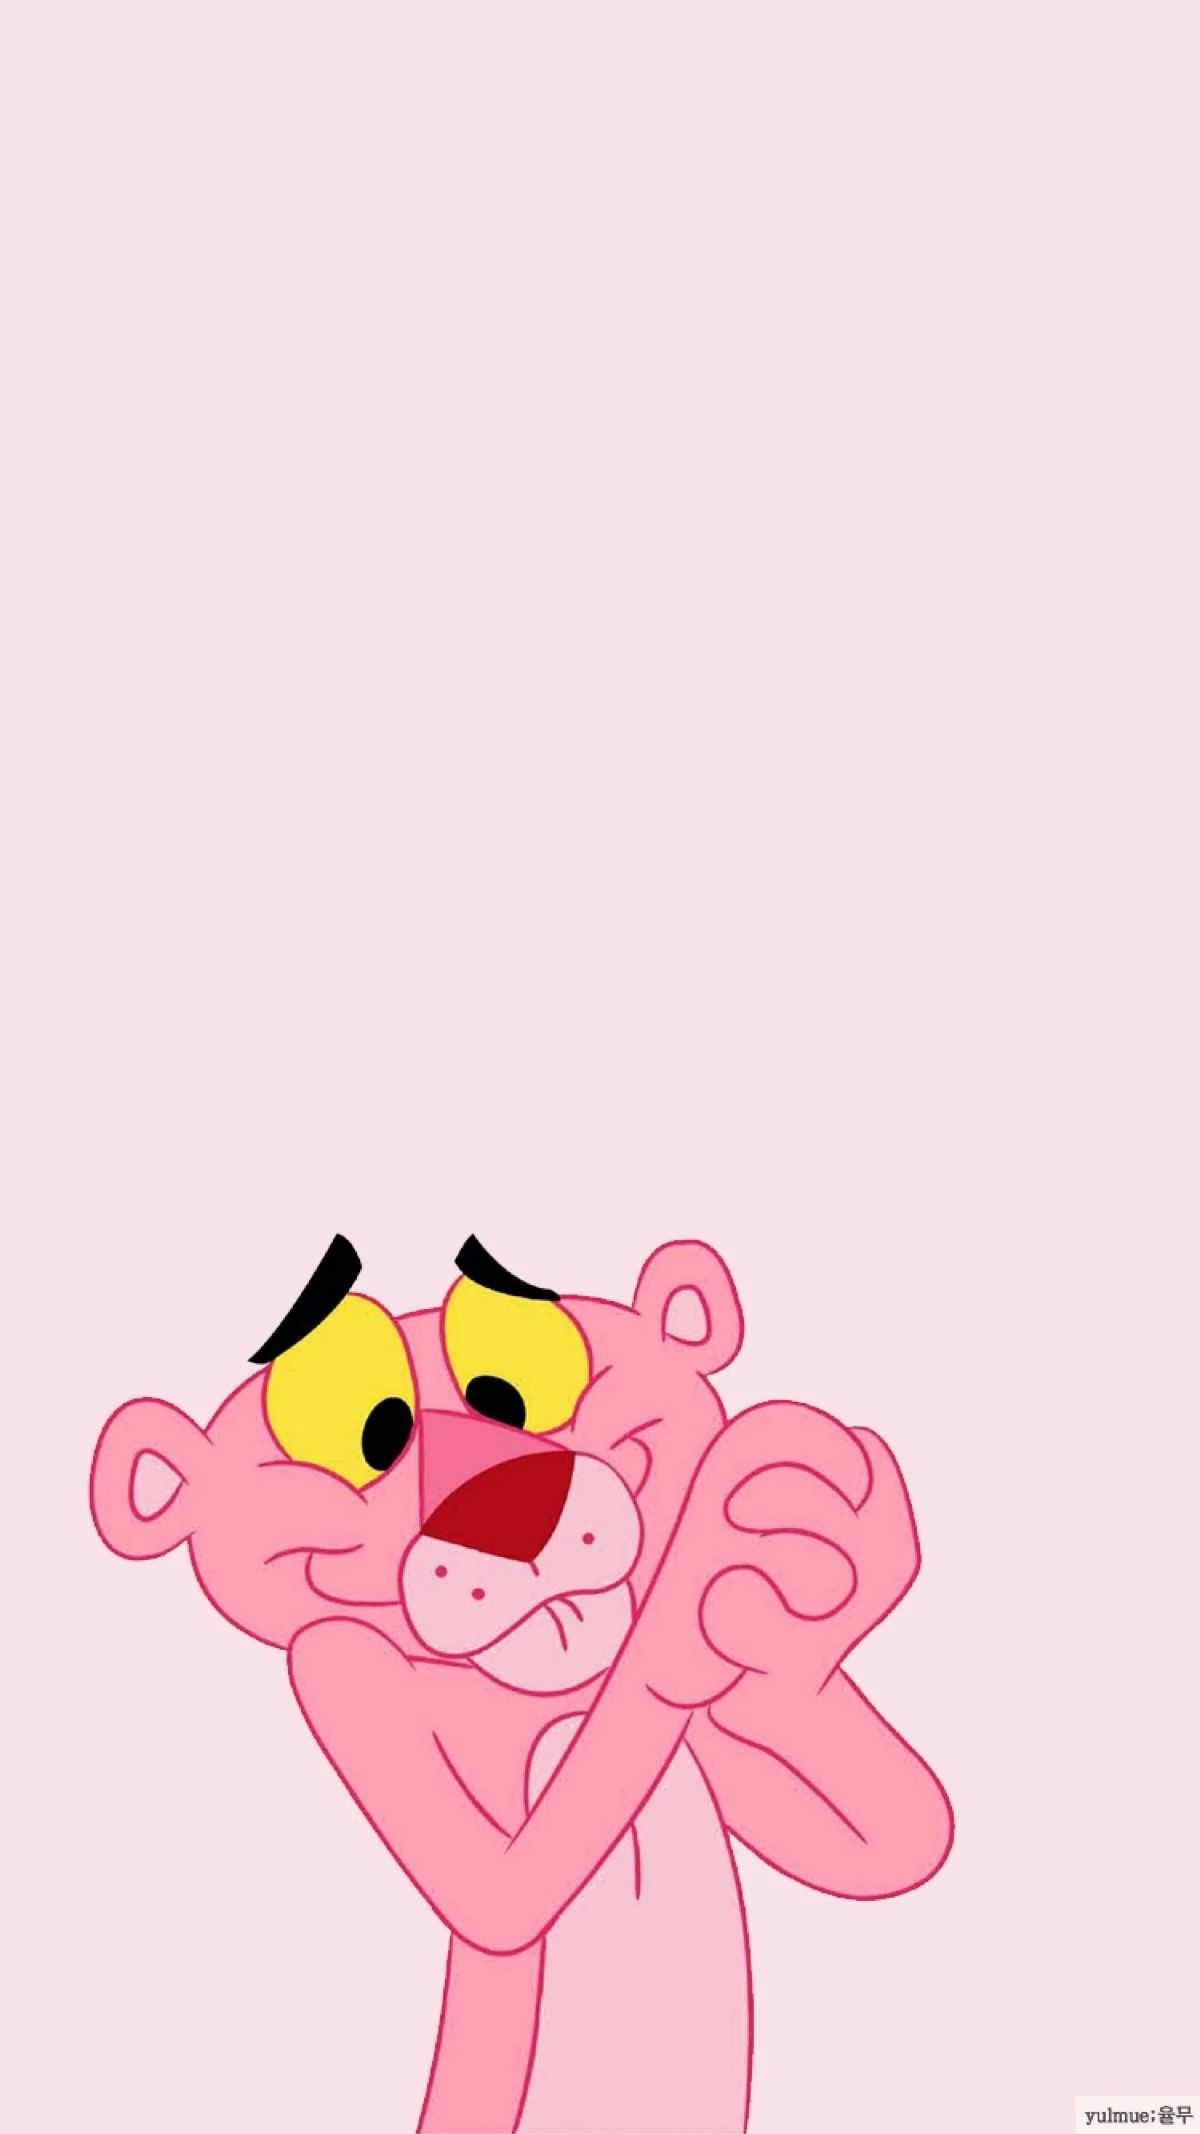 Pink Panther wallpaper. Wallpaper de desenhos animados, para iphone, Plano de desenhos animados